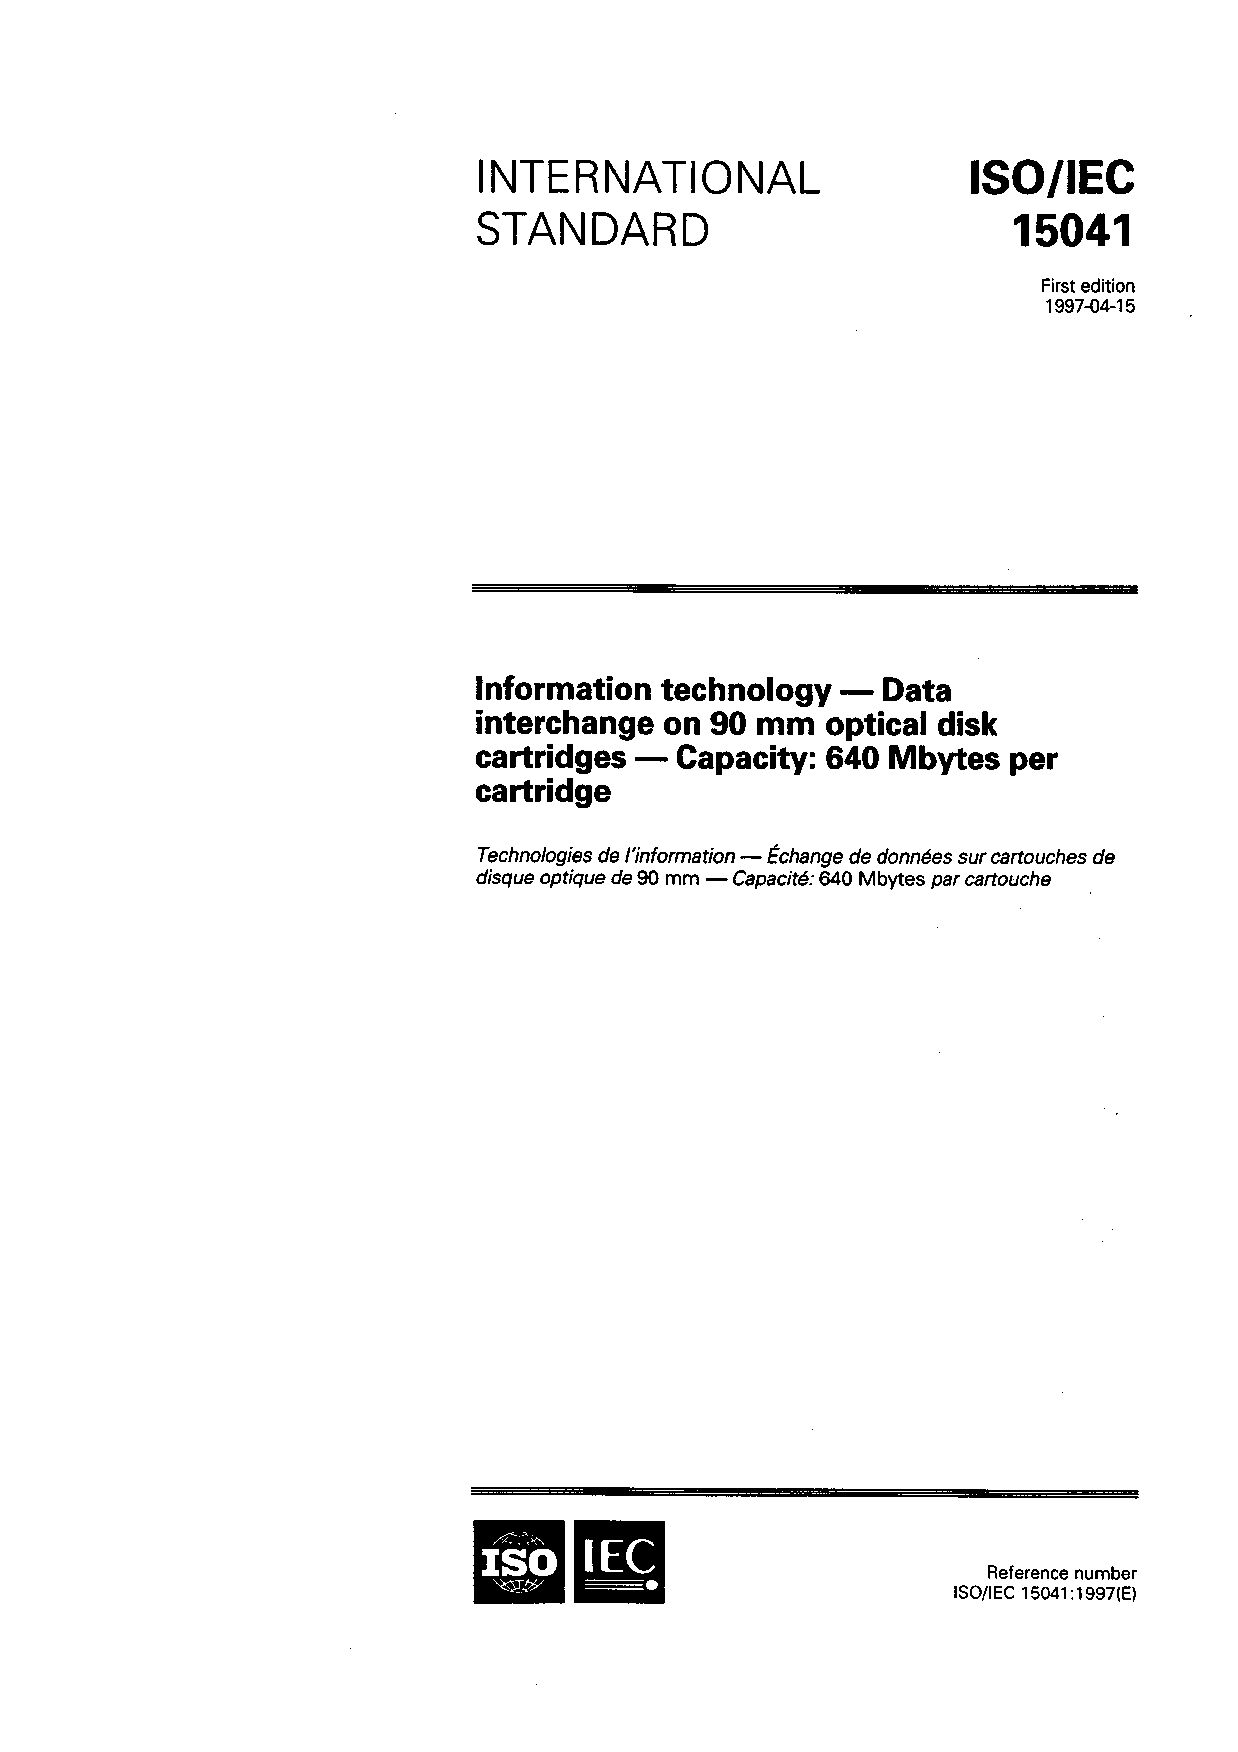 ISO/IEC 15041:1997